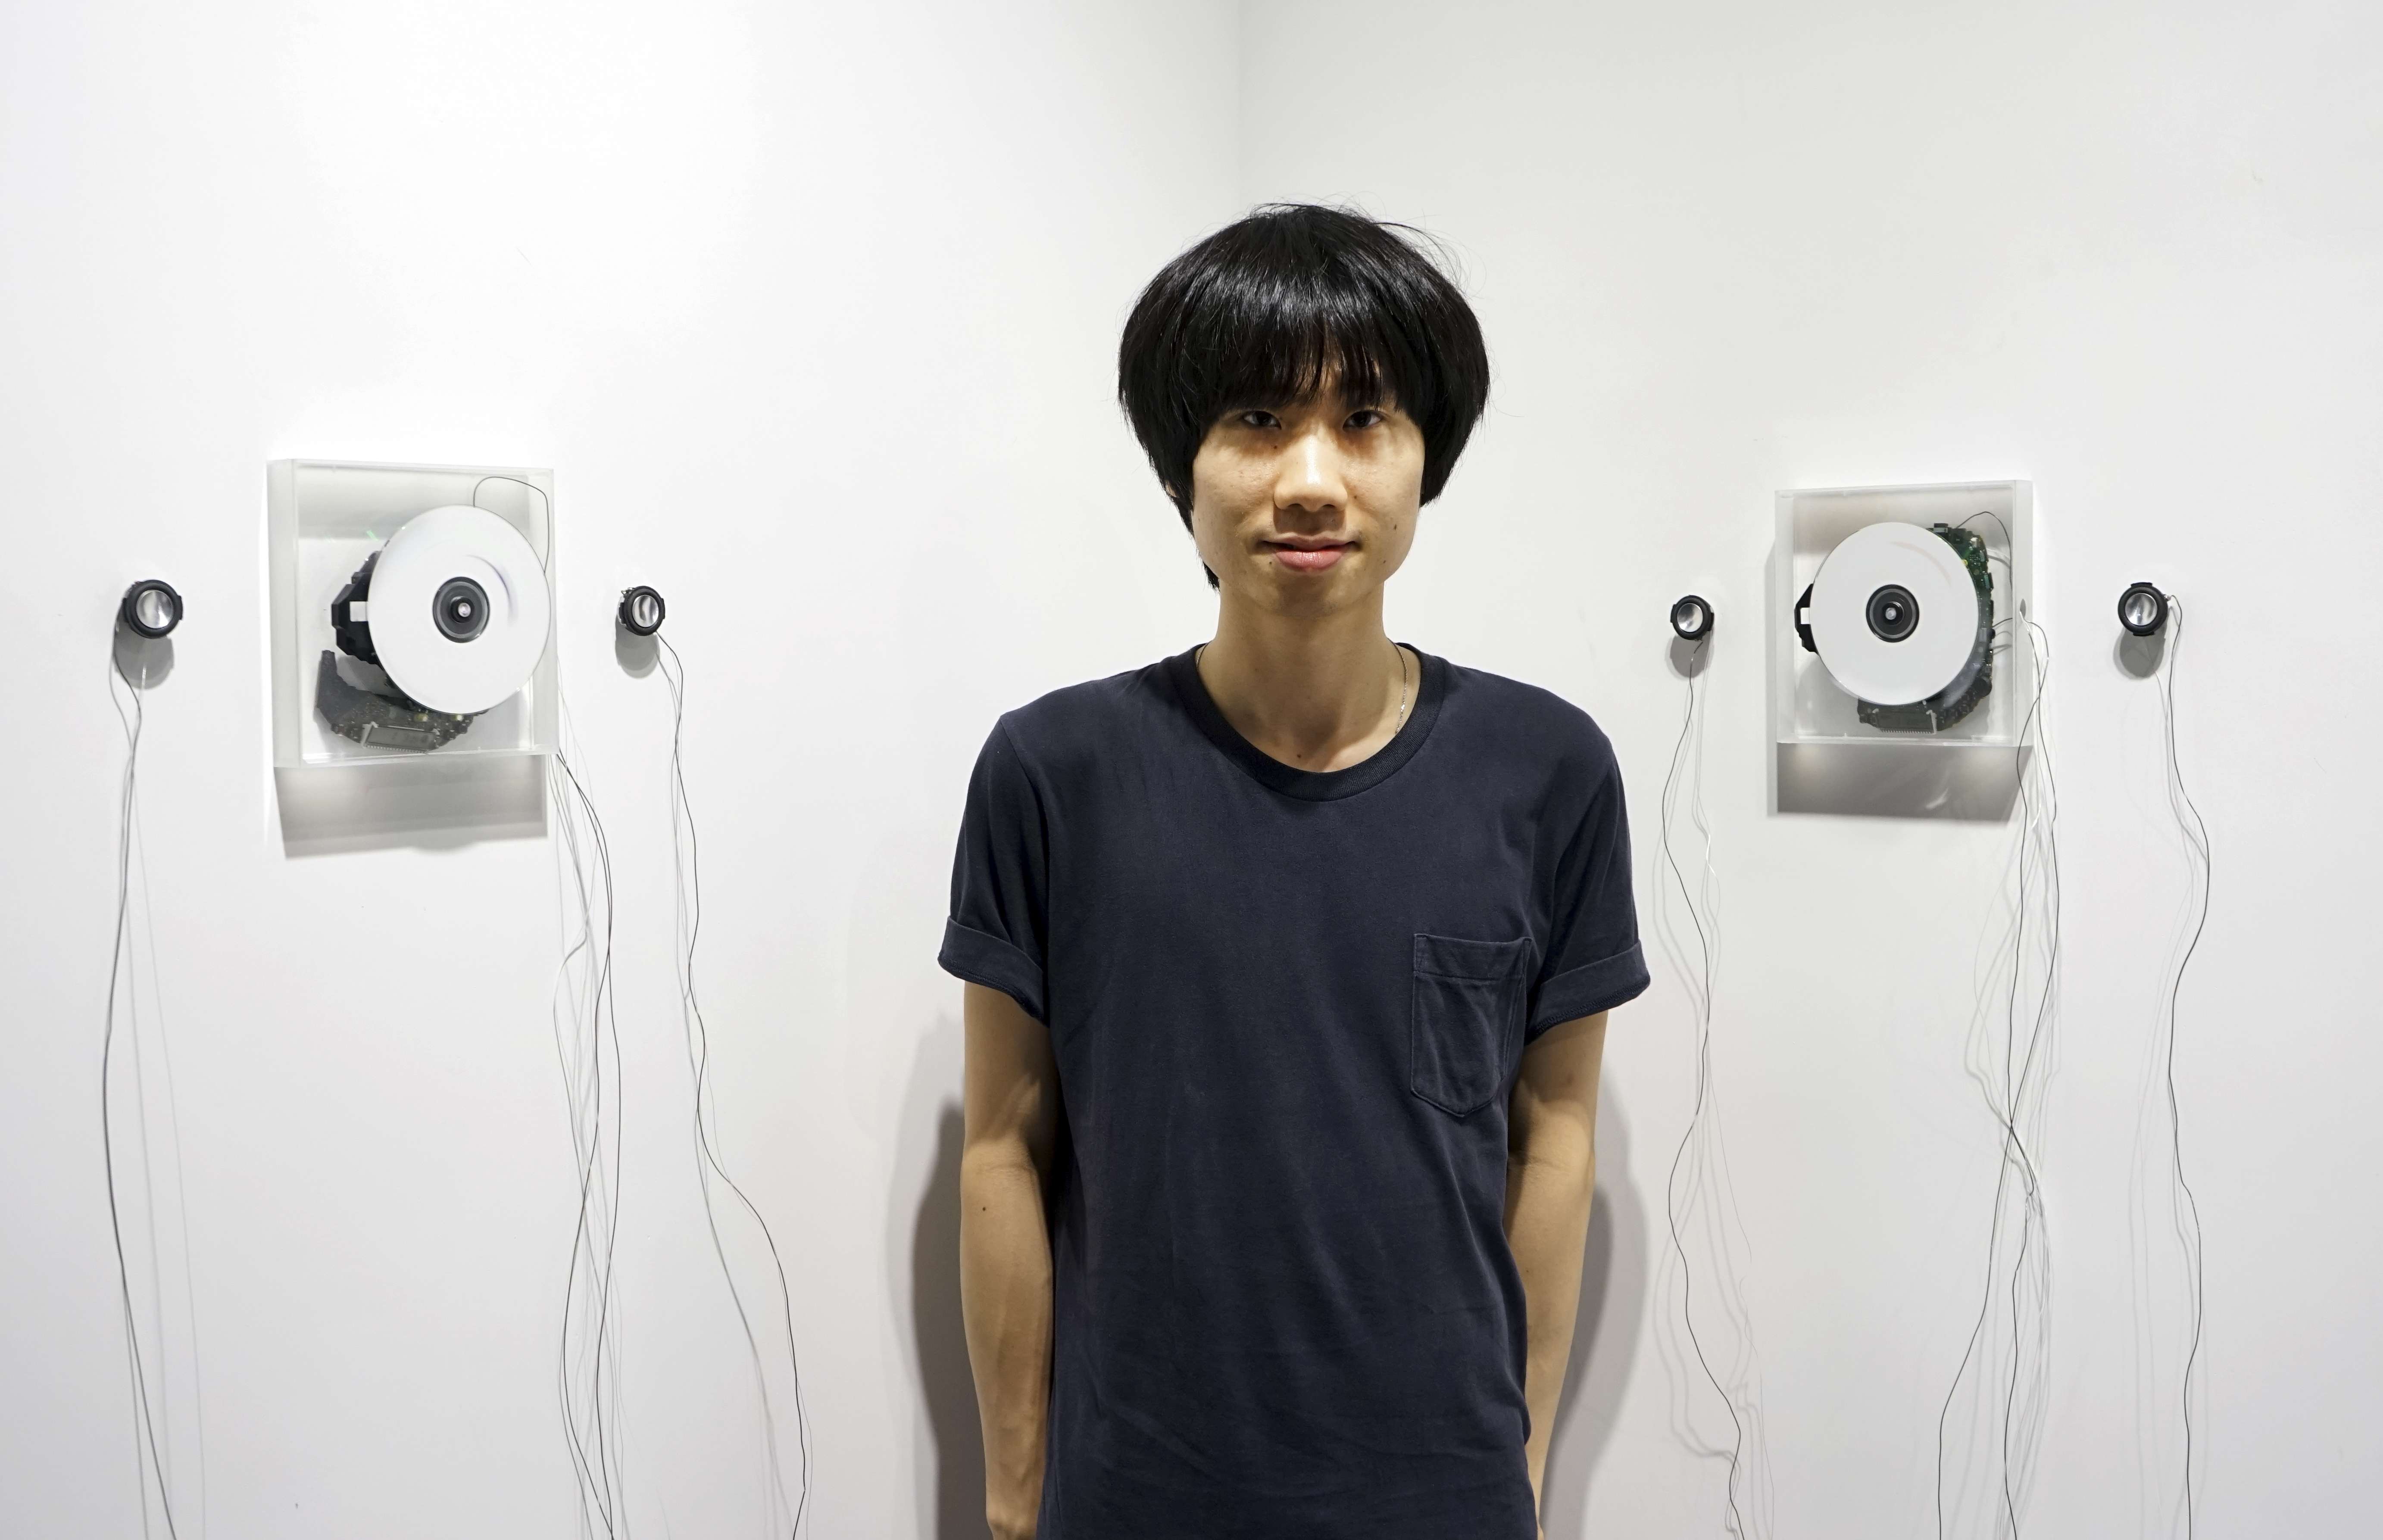 Lee Siu-hin with his installation |·o·||·o·||·o·||·o·||·o·||·o·|, at this year’s First Smash Art Project at Art Experience Gallery.